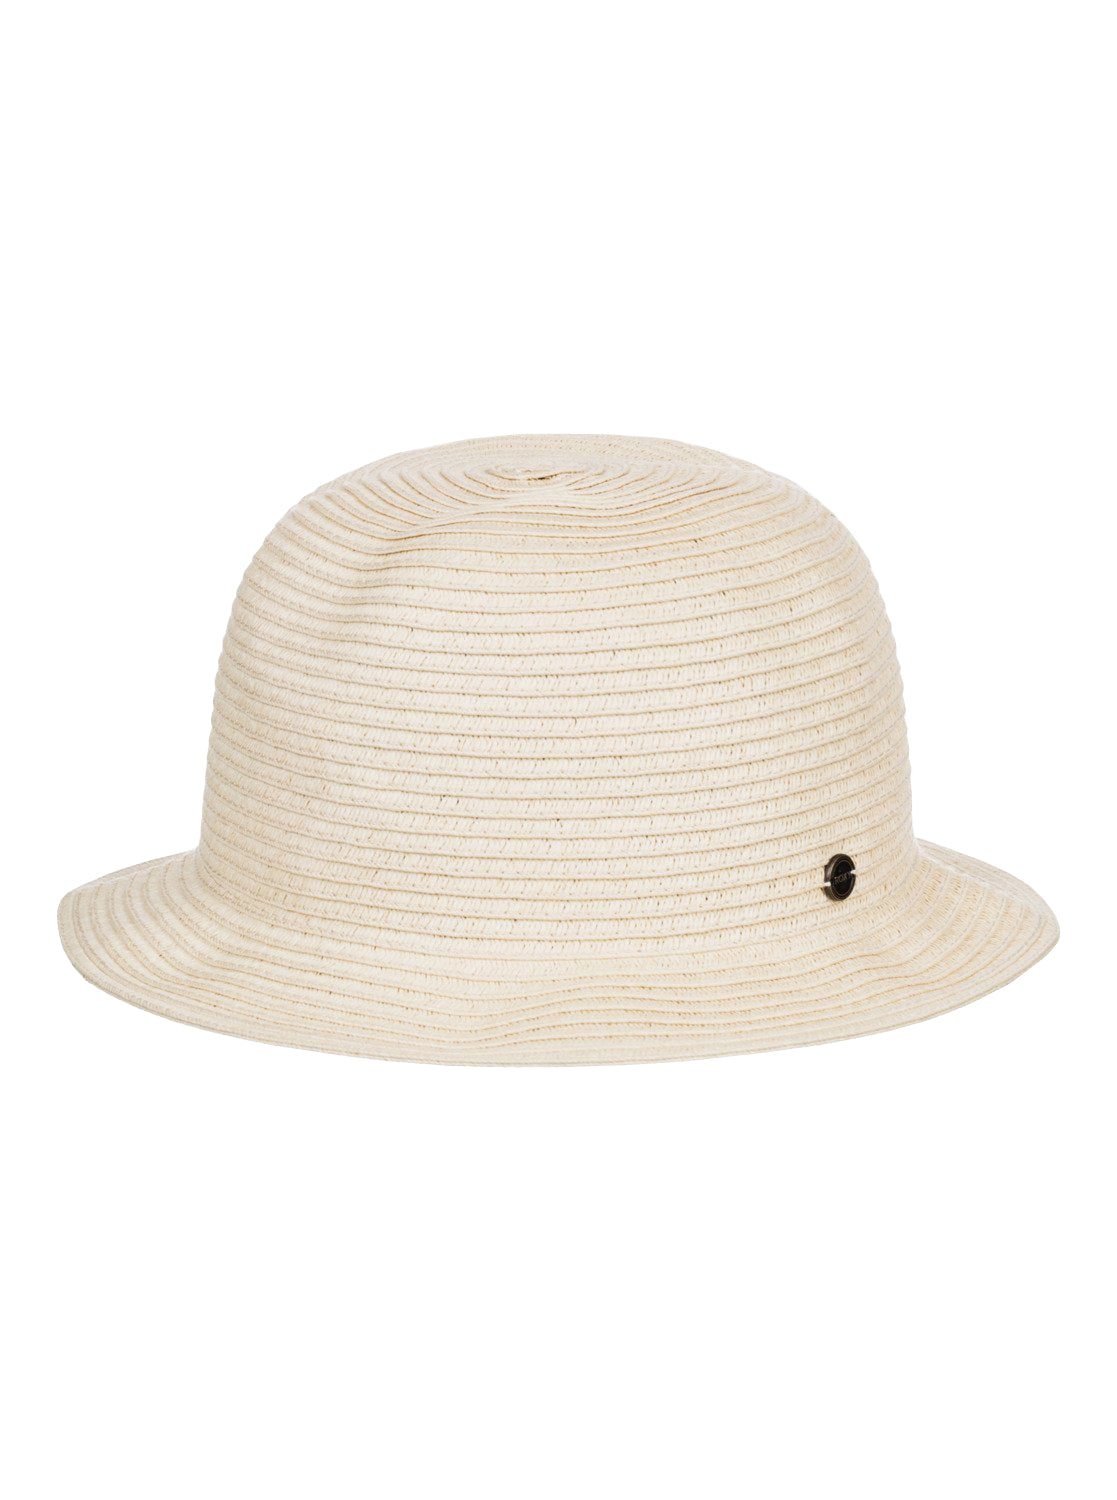 Roxy Summer Mood Bucket Hat YEF0 S/M